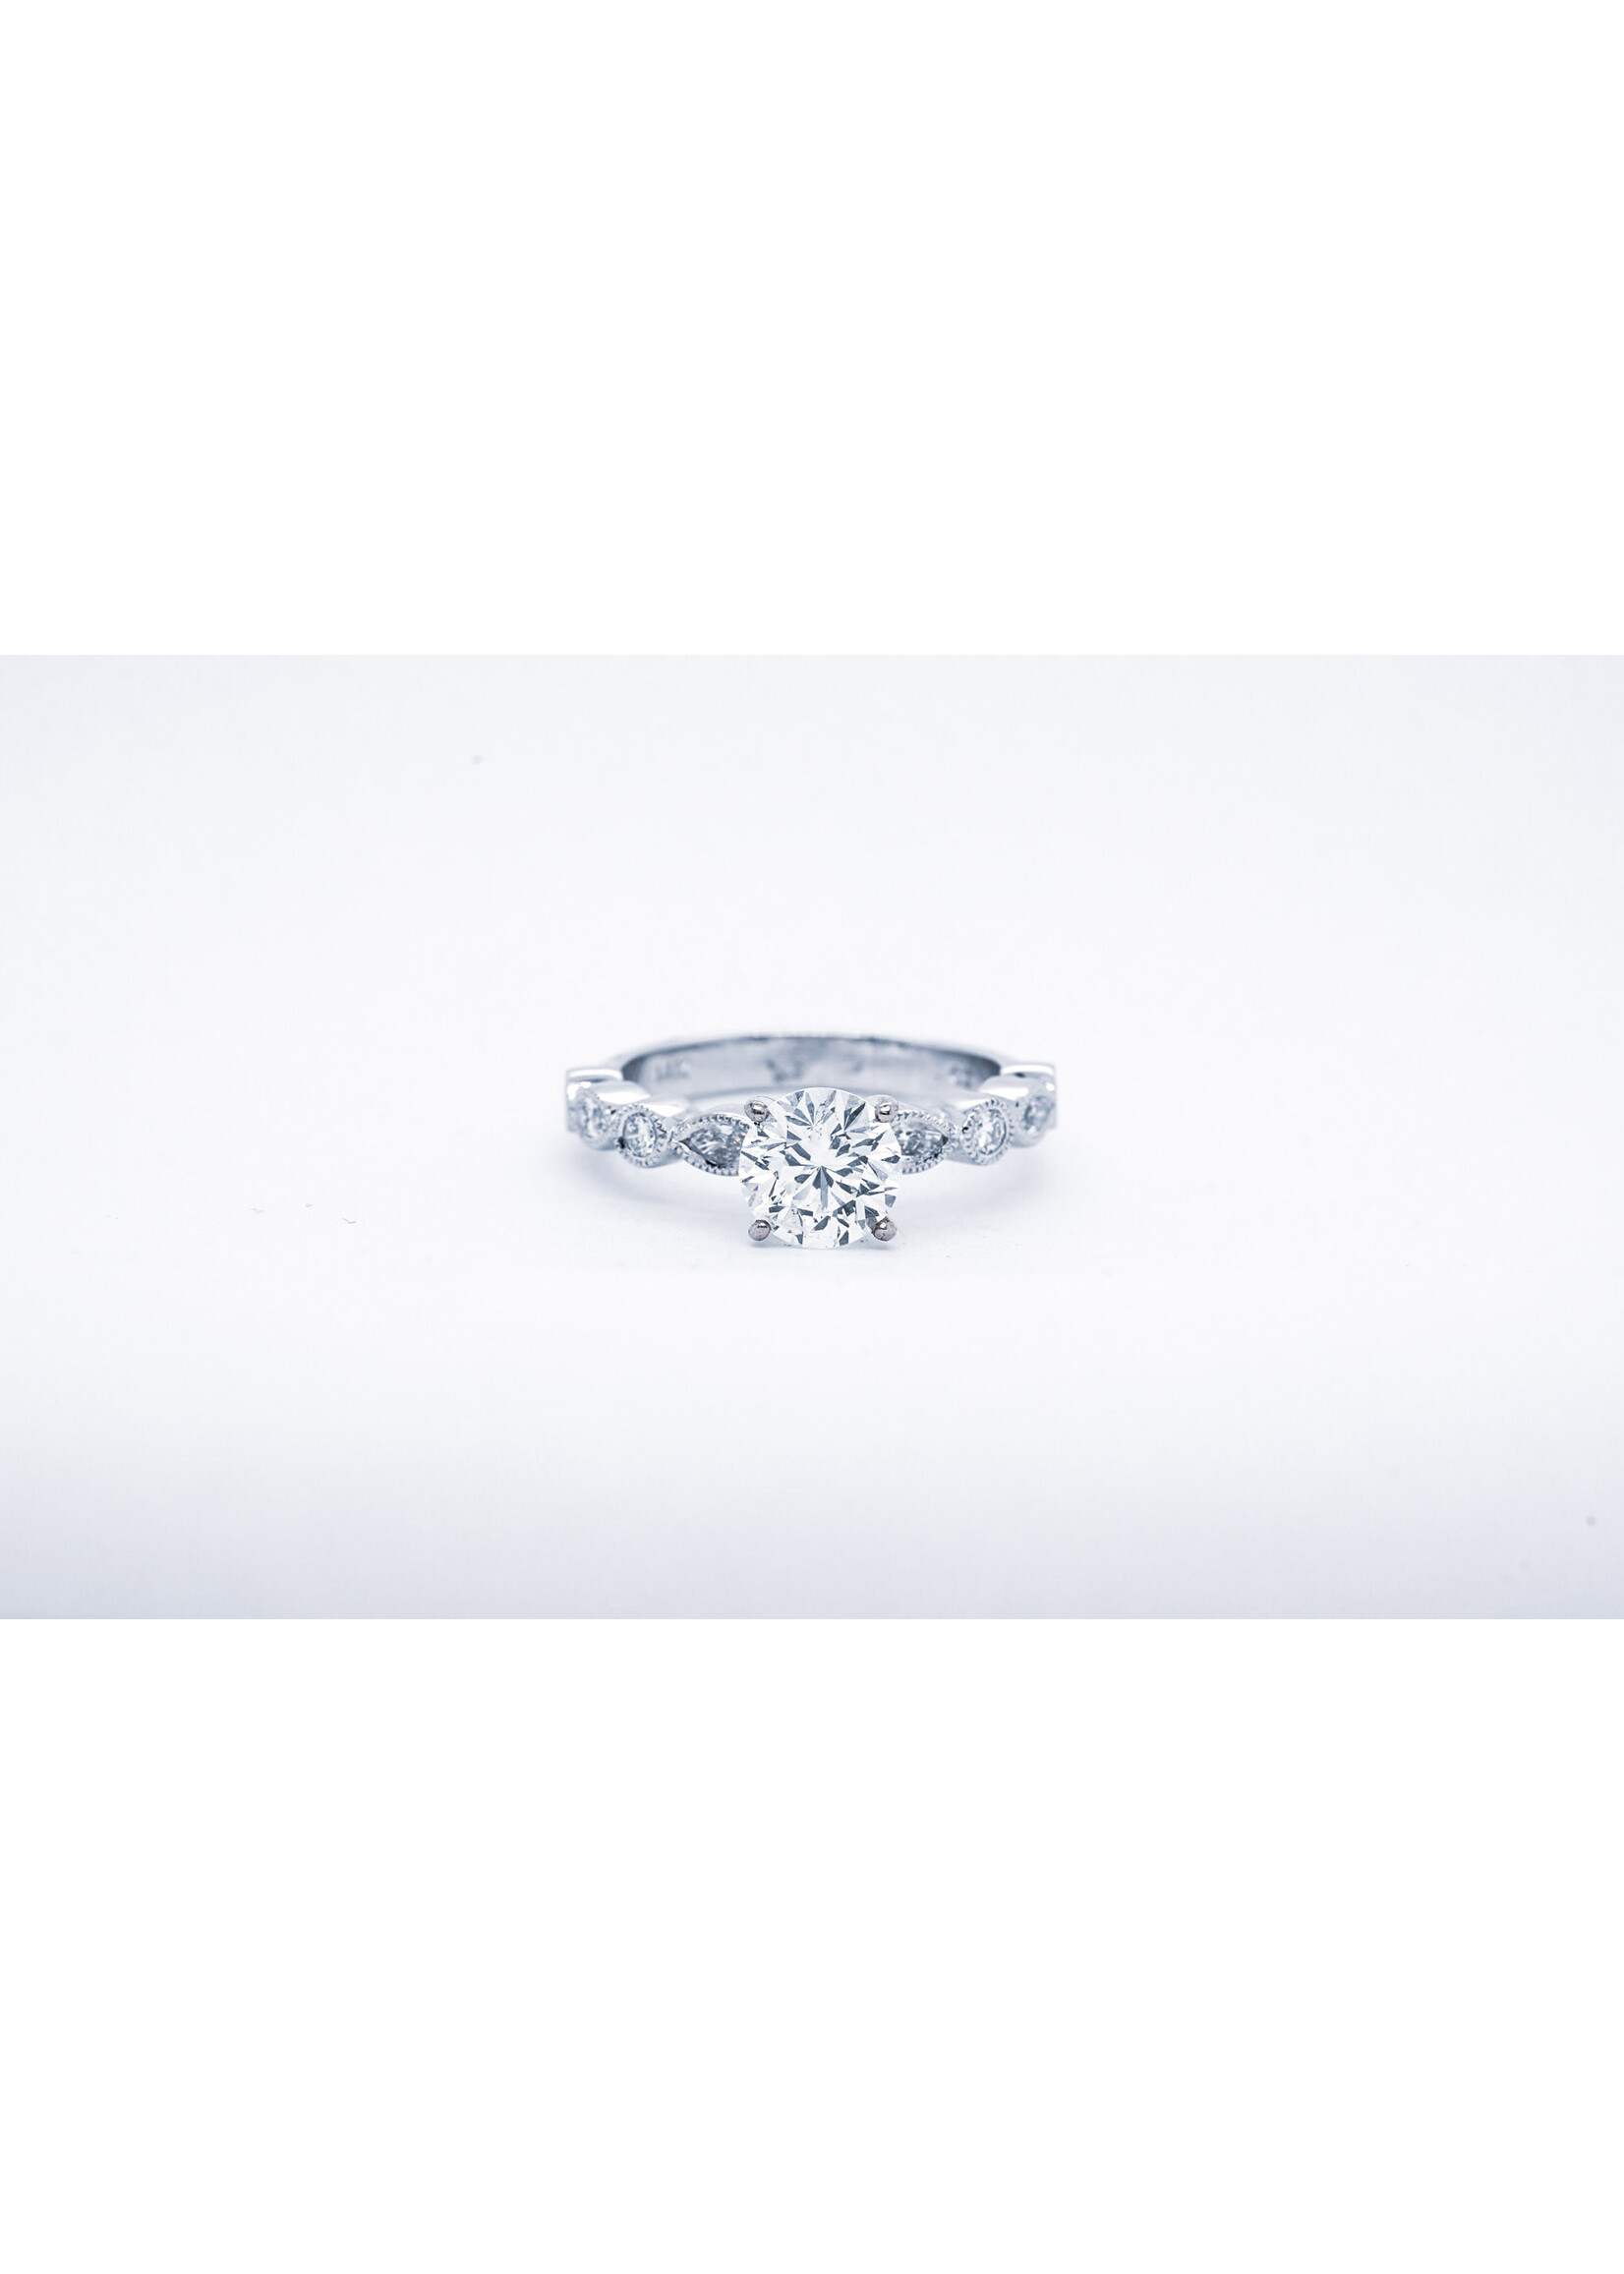 14KW 4.01g 2.11ctw (1.46ctr) I/SI2 Round Leo Diamond Engagement Ring (size 6.5)